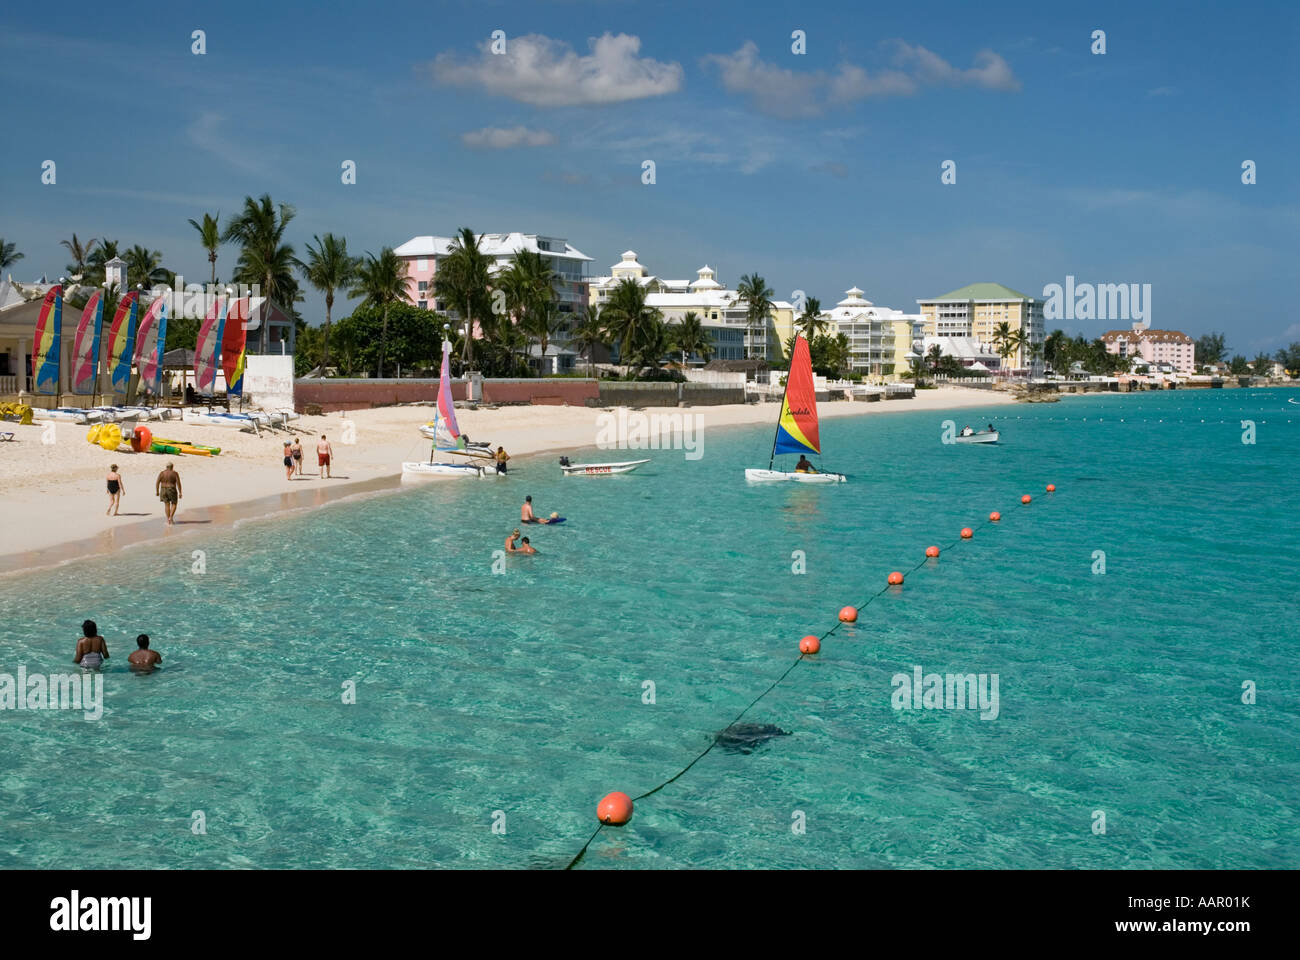 Sandals Resort, Nassau, Bahamas Stock Photo - Alamy